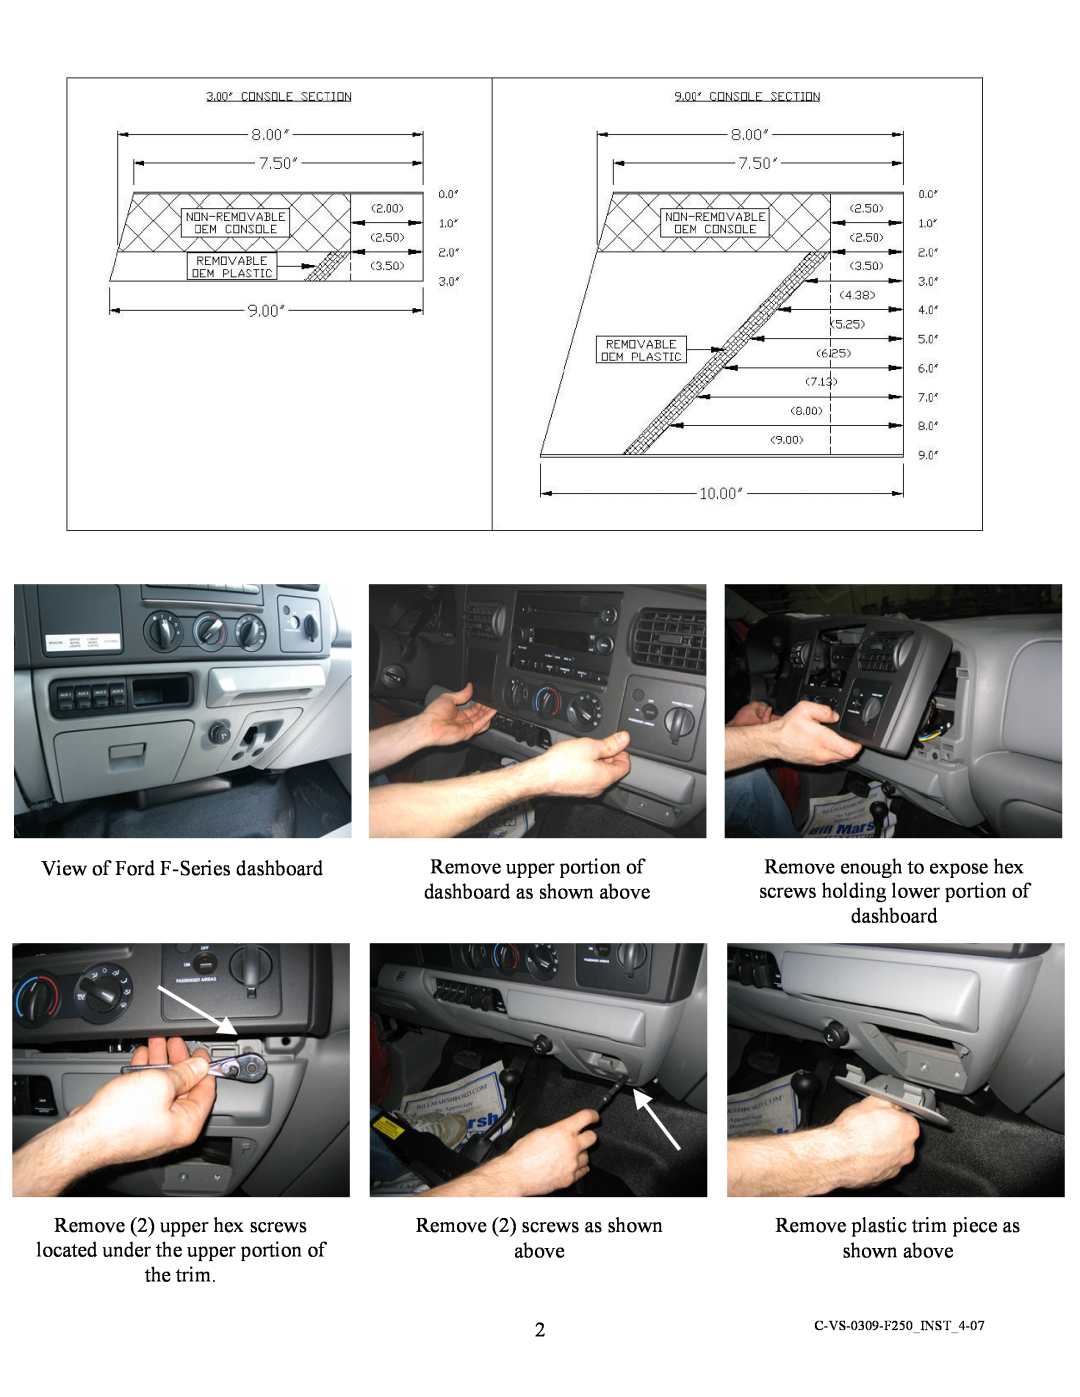 Havis-Shields GSM30023 manual View of Ford F-Seriesdashboard 